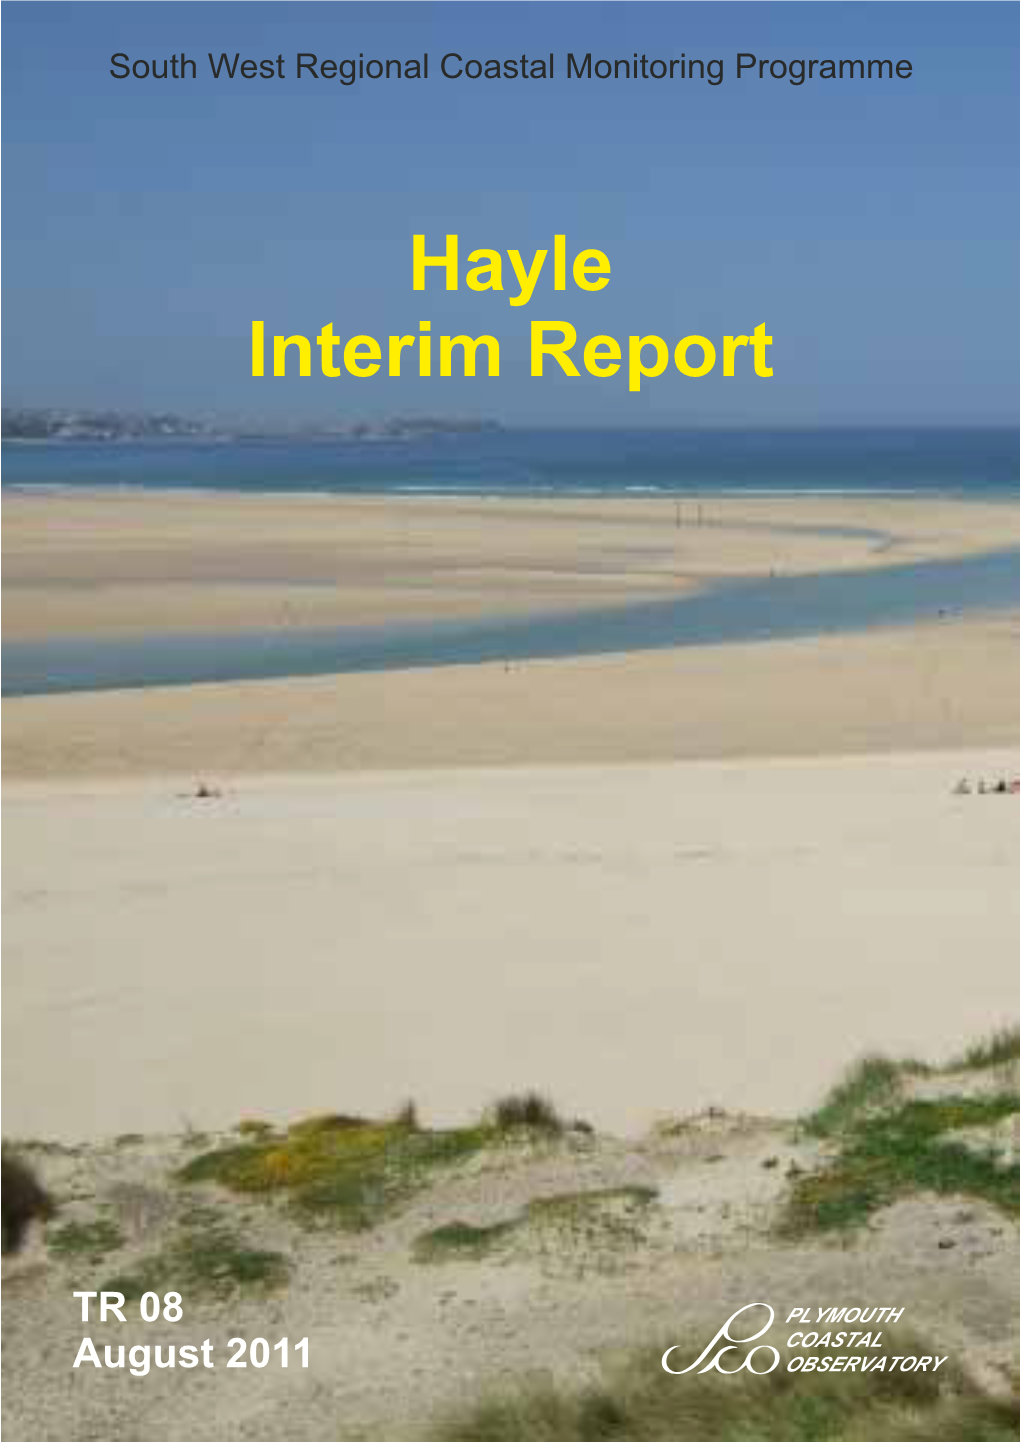 Hayle Interim Report